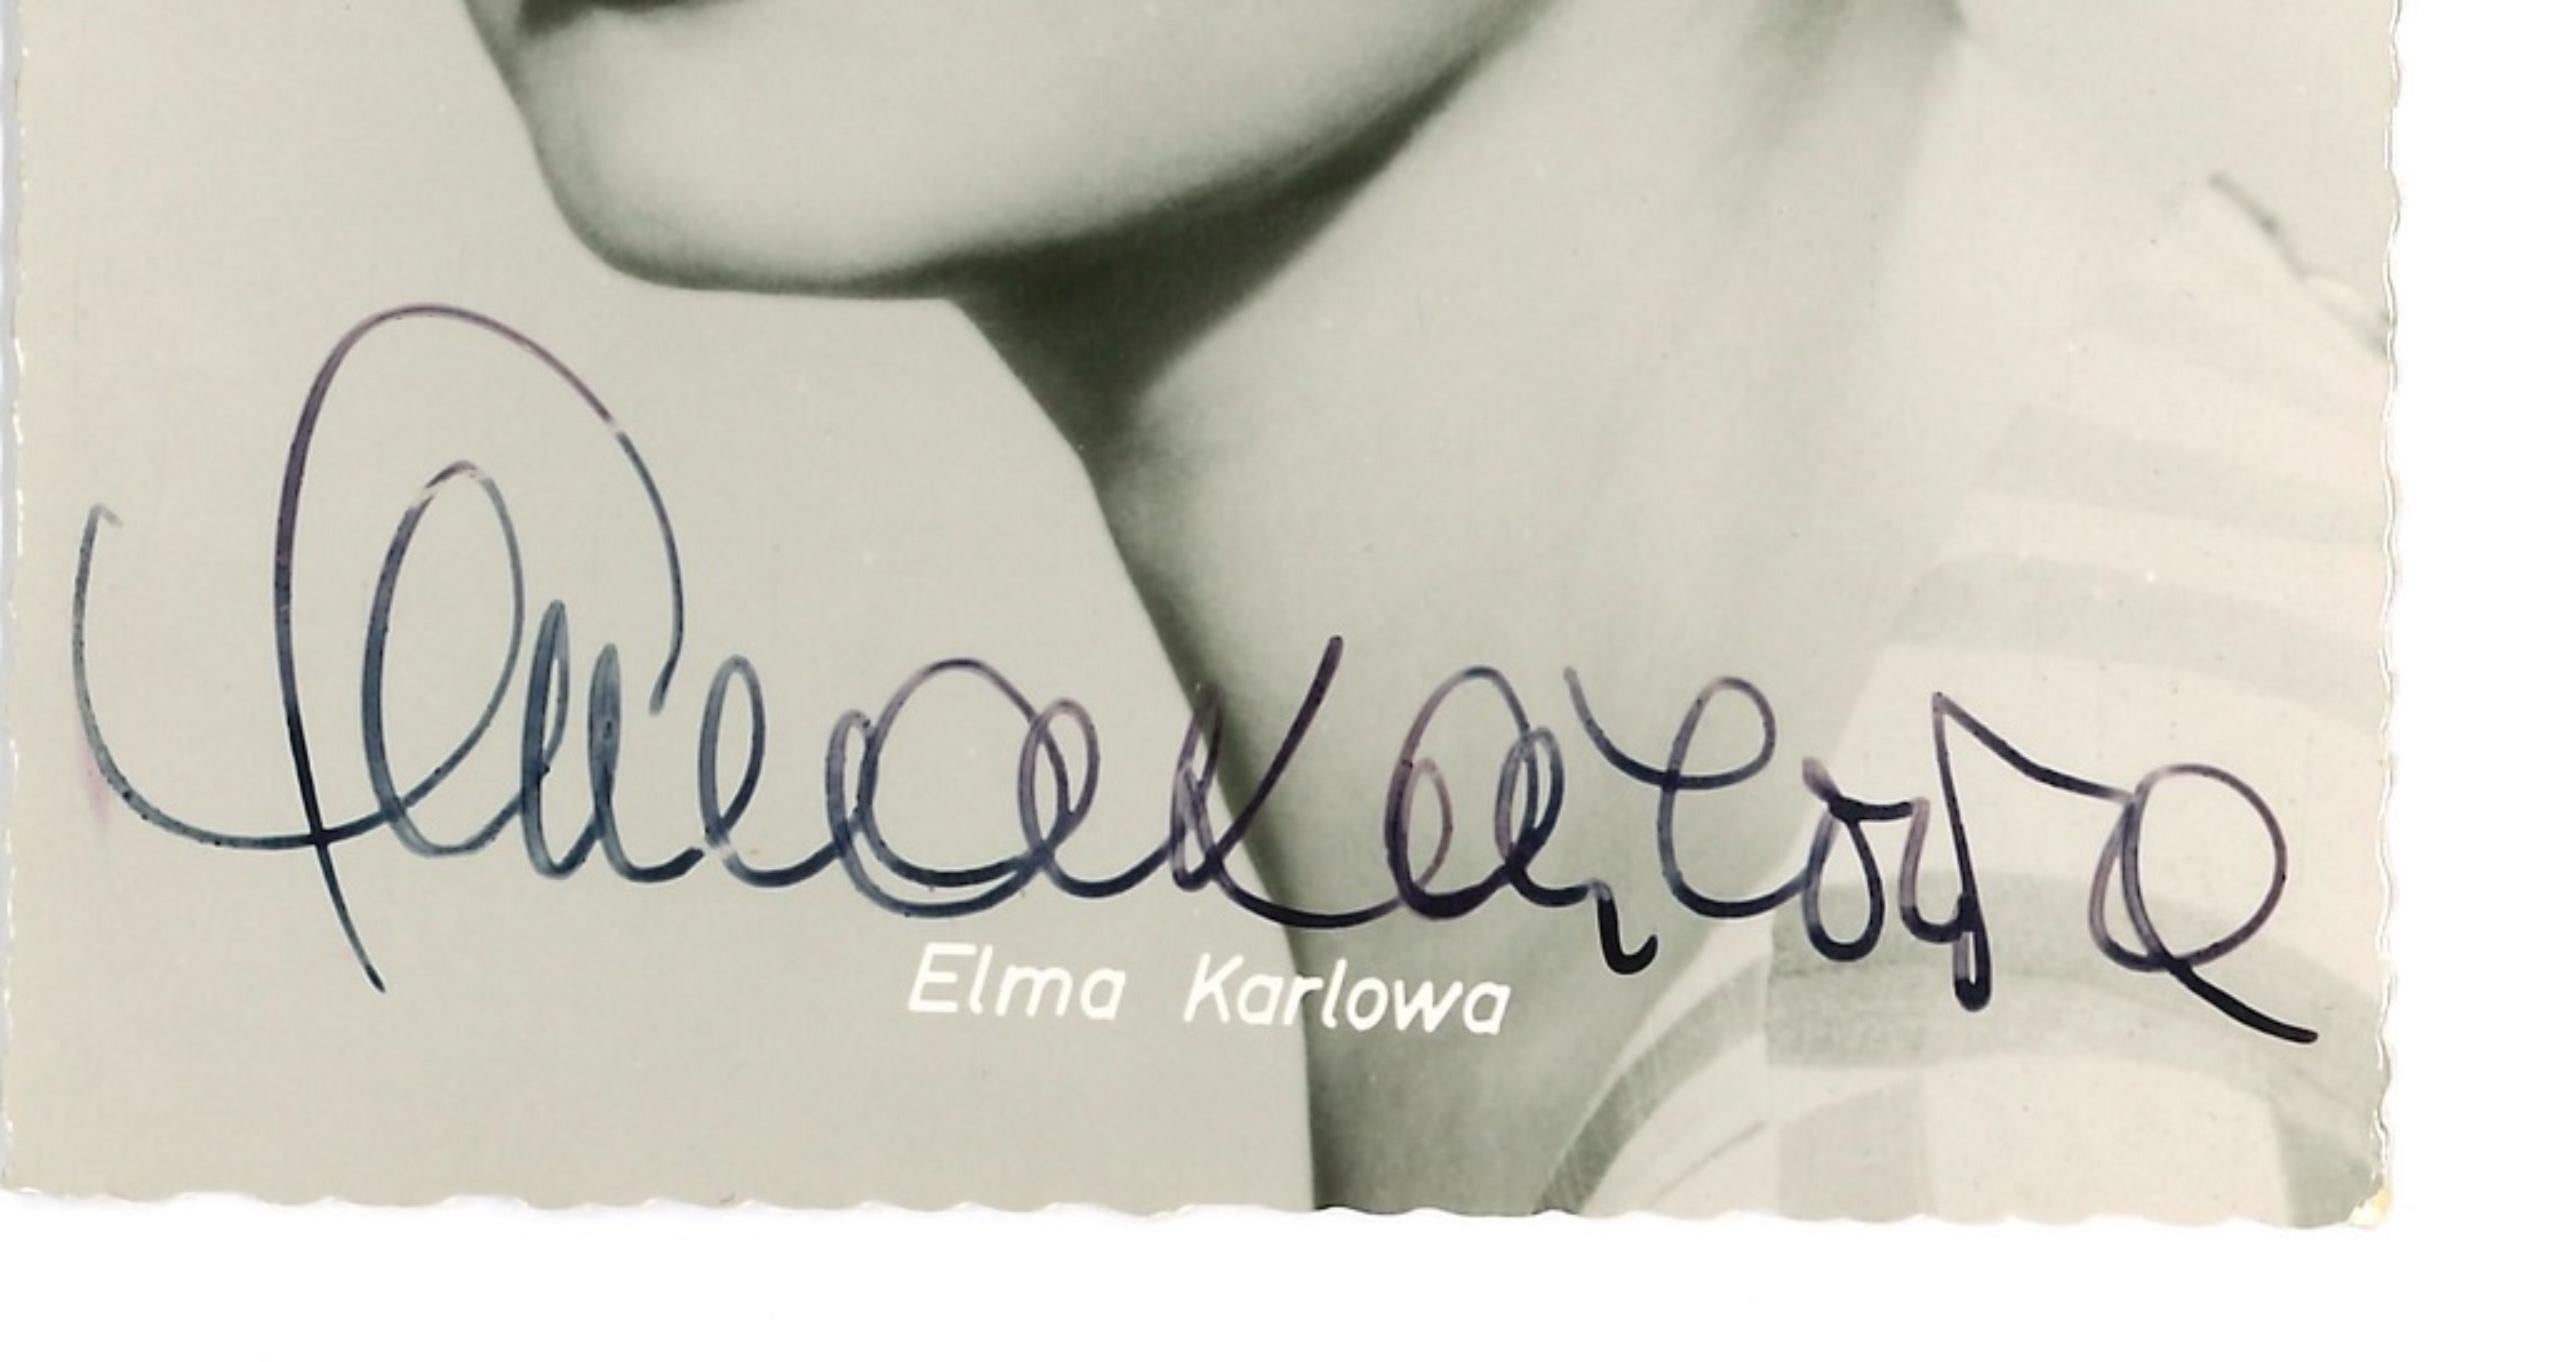 Autographed Portrait of Elma Karlowa - Original b/w Postcard - 1960s - Photograph by Unknown